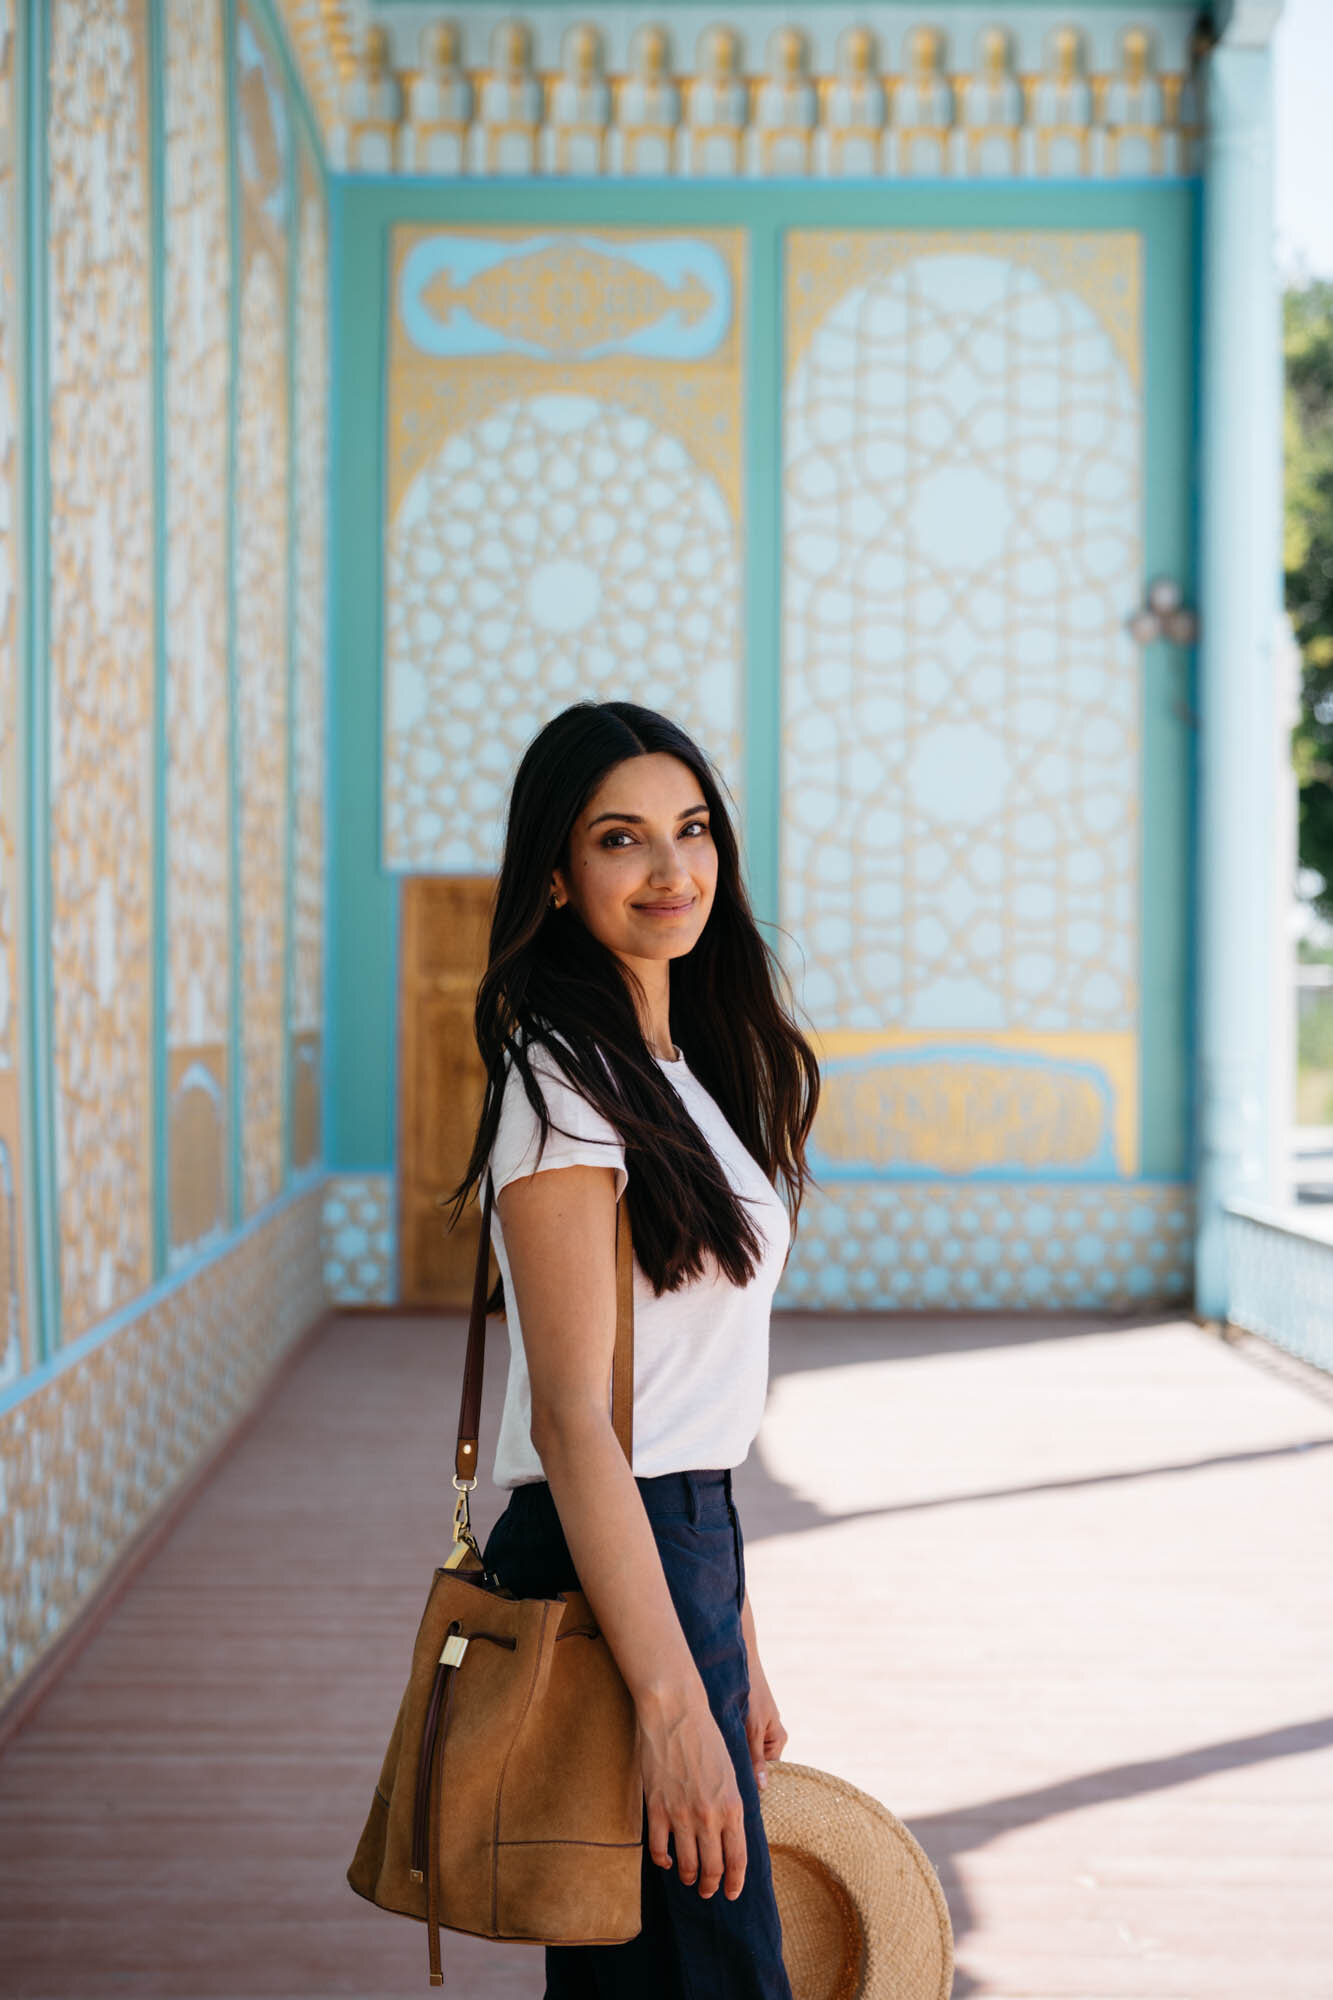  Aleyha at the Summer Palace of the last Emir of Bukhara 